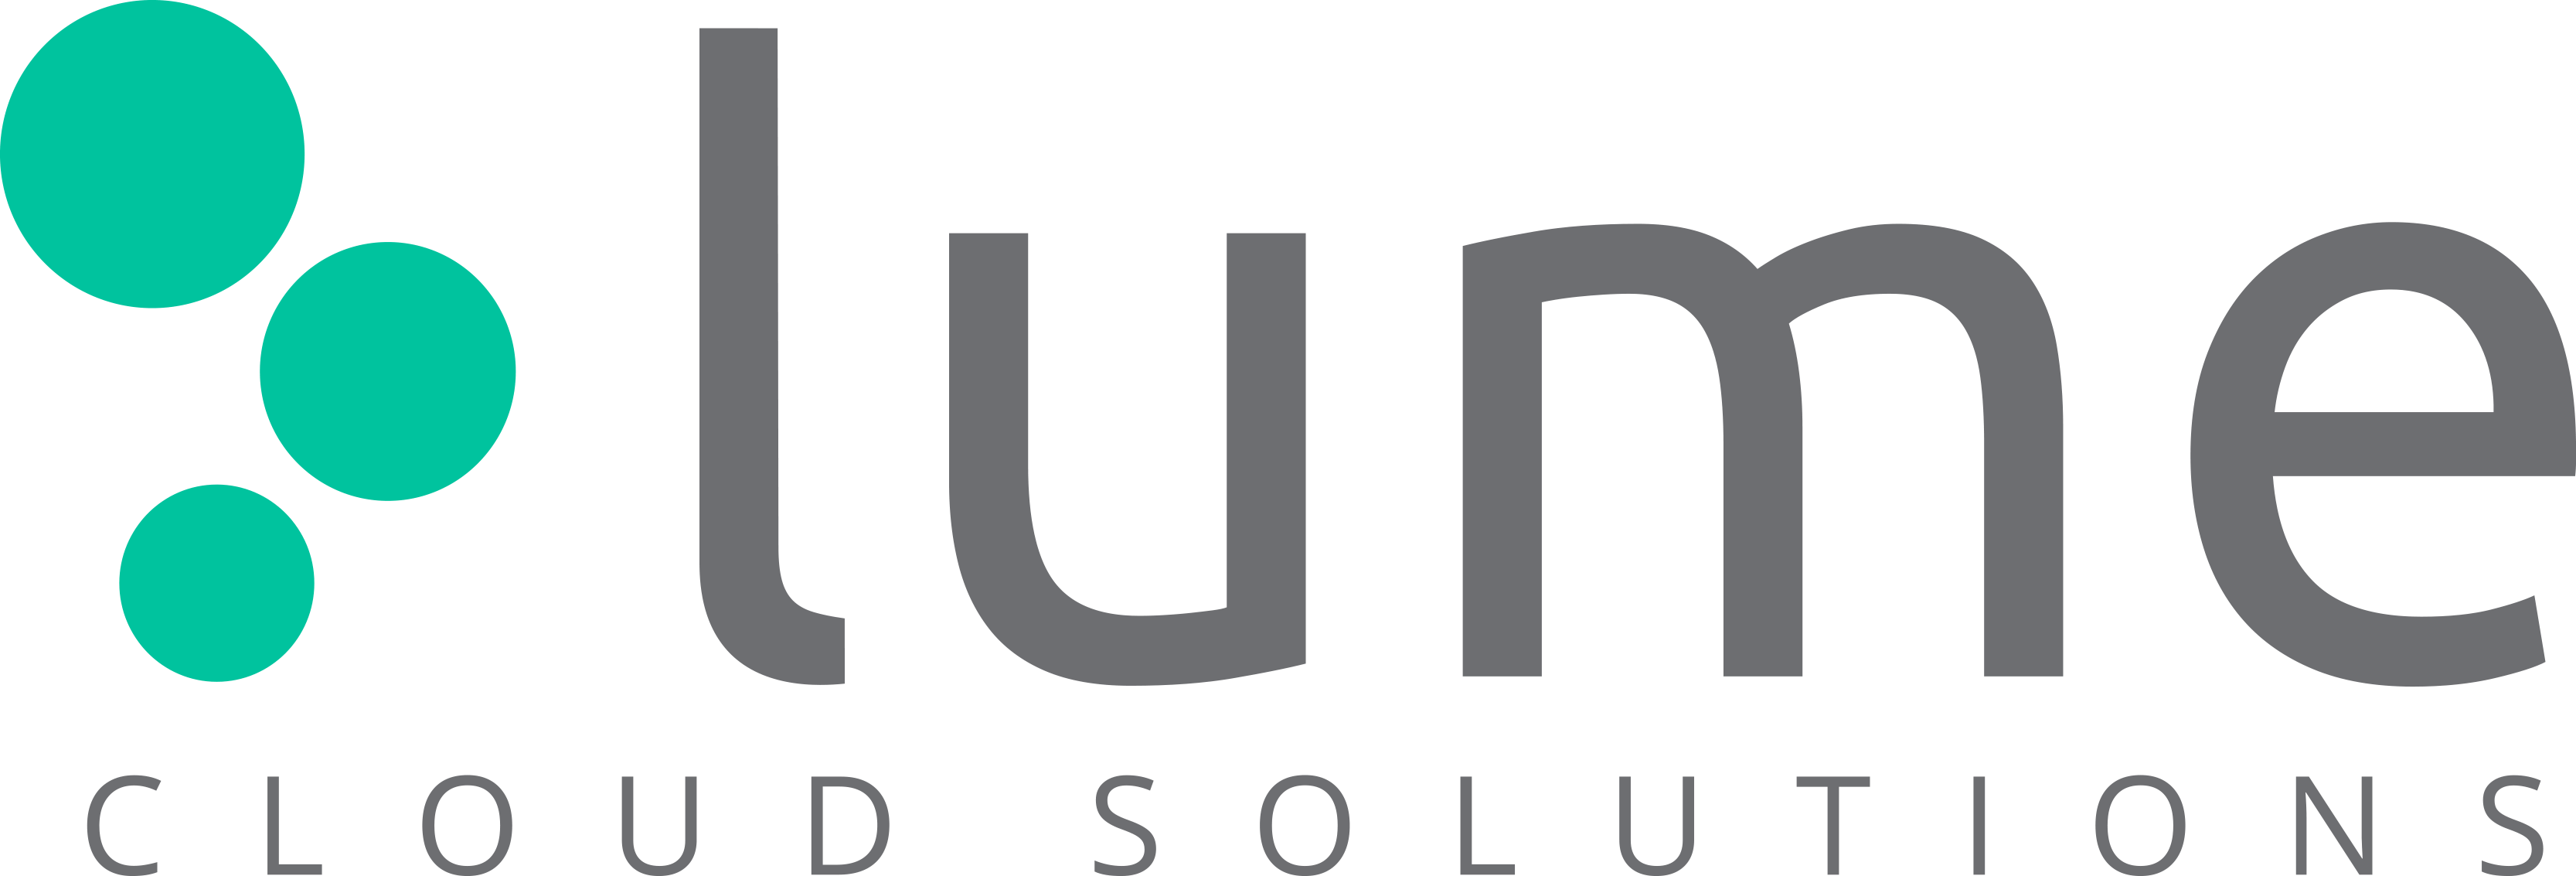 Lume Logo